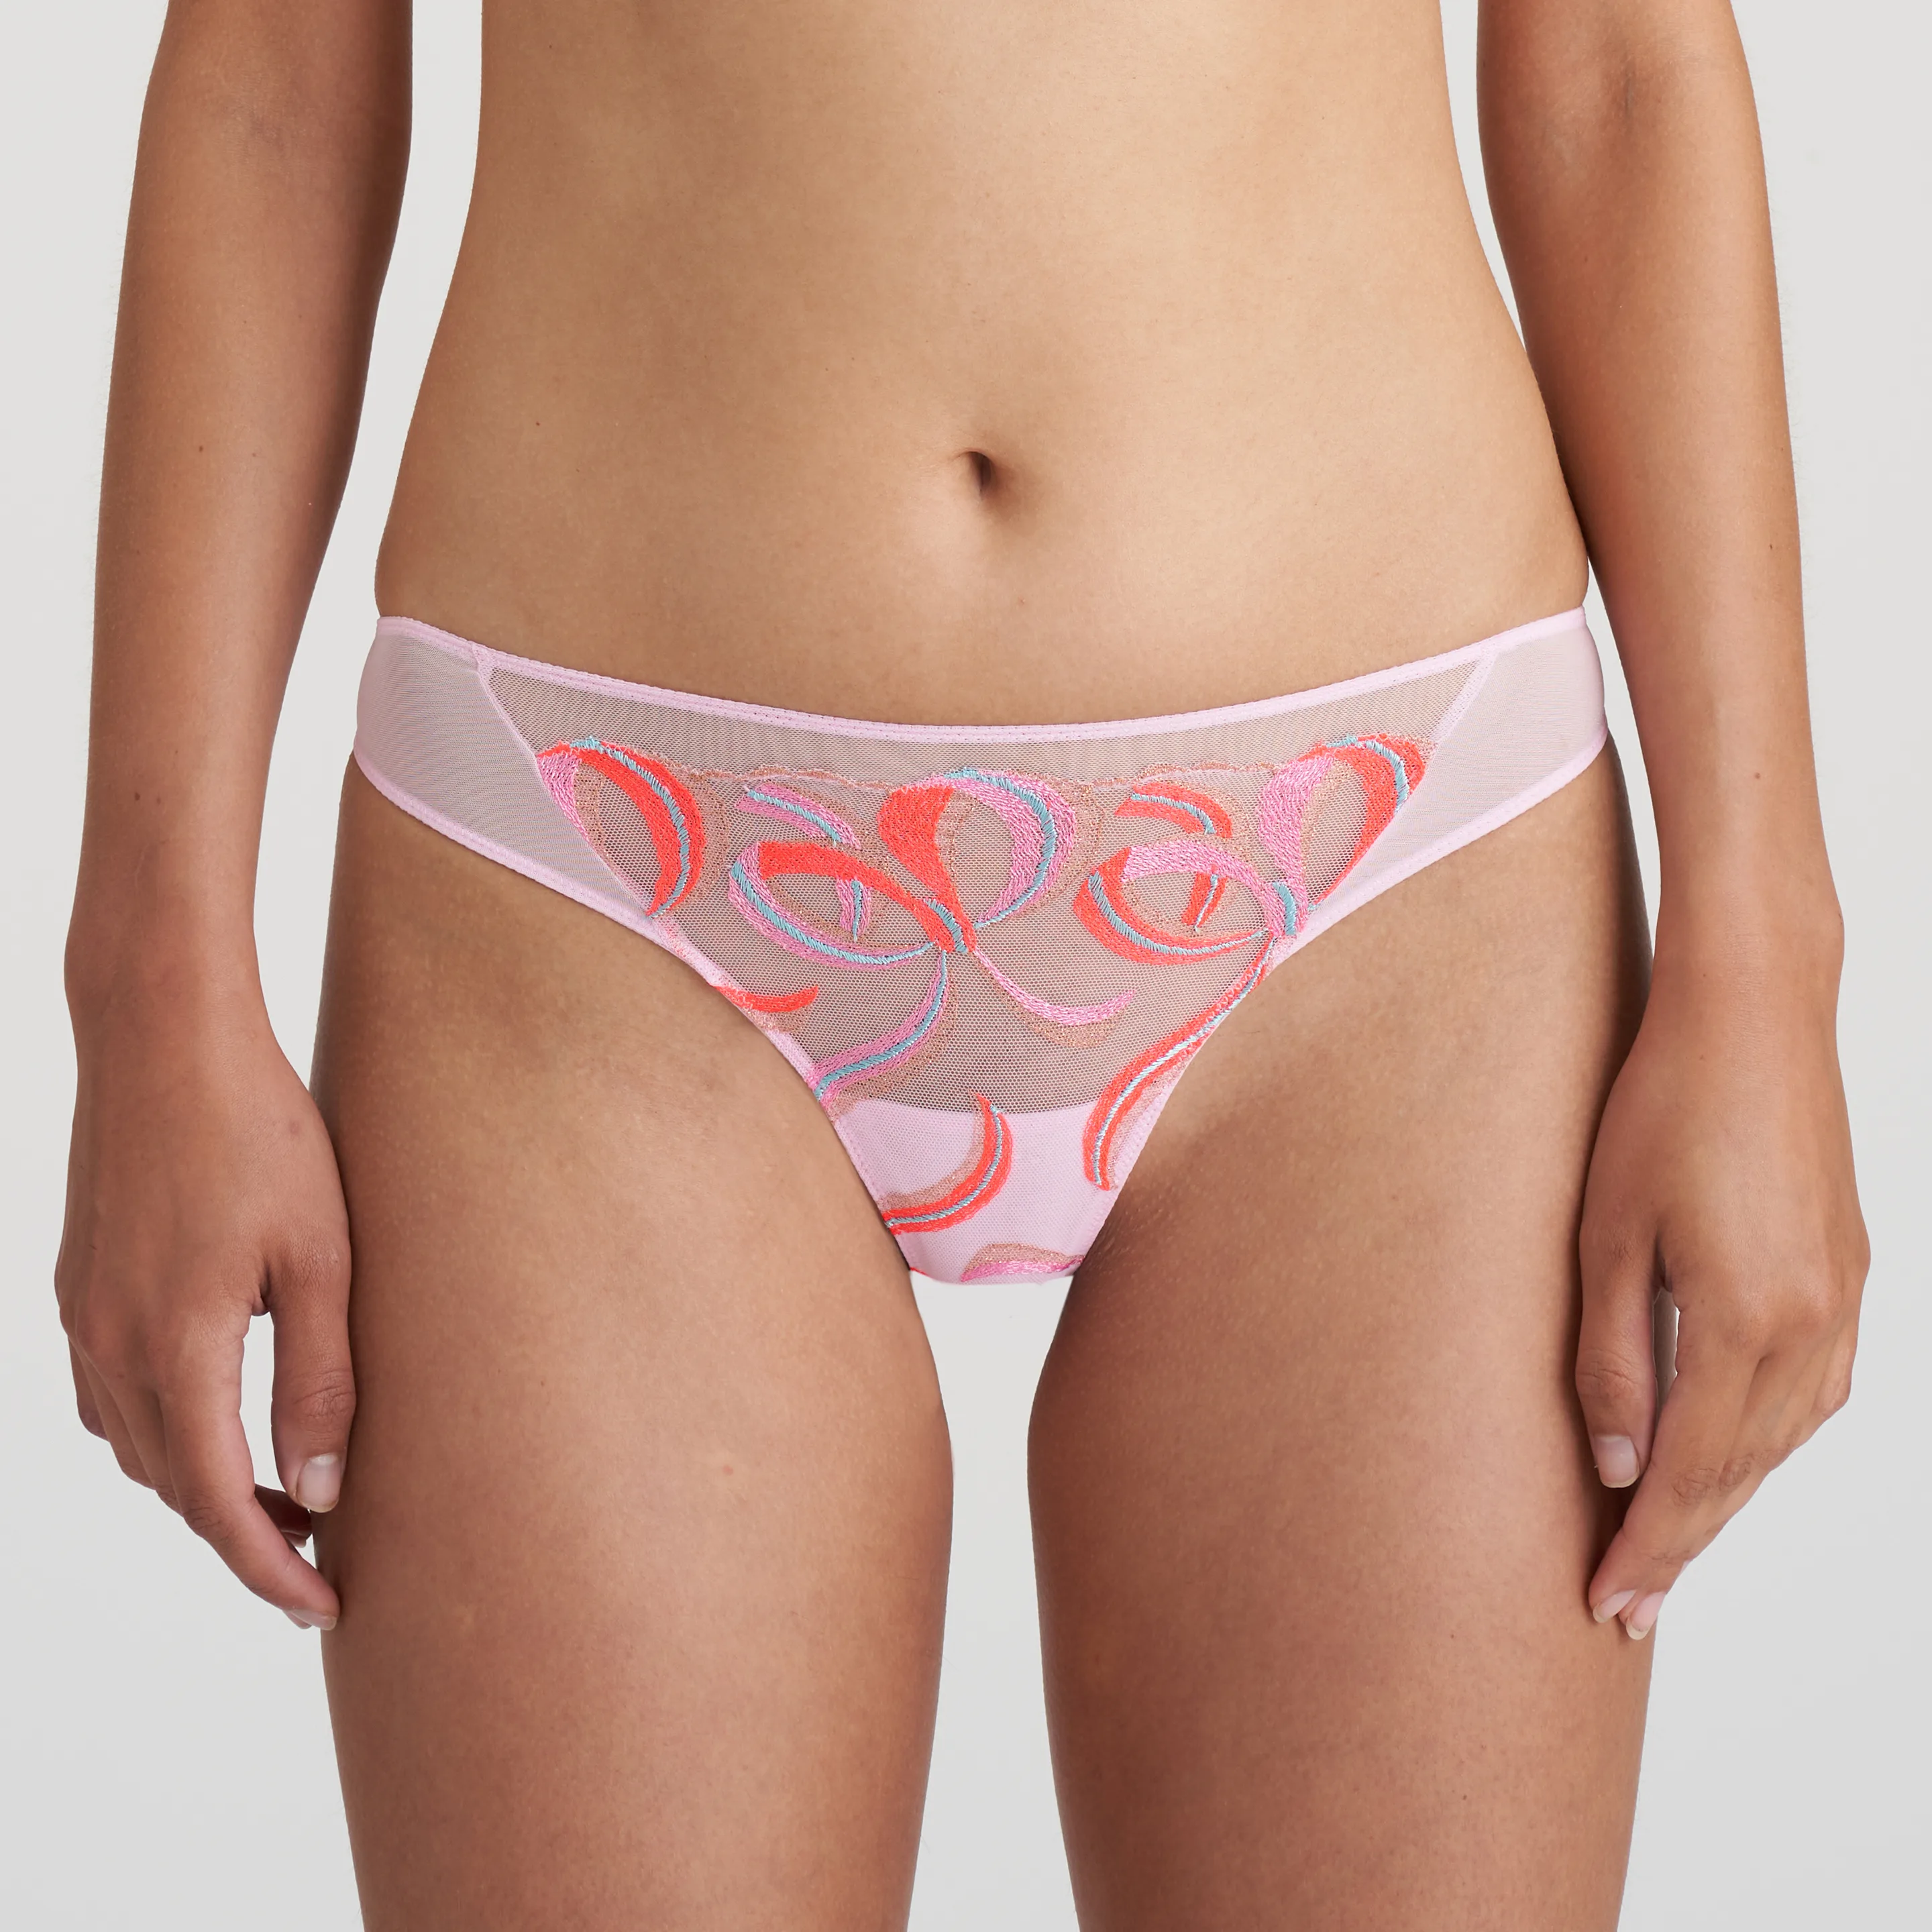 Download Dark Rose Thong Product Image Back - Underpants - Full